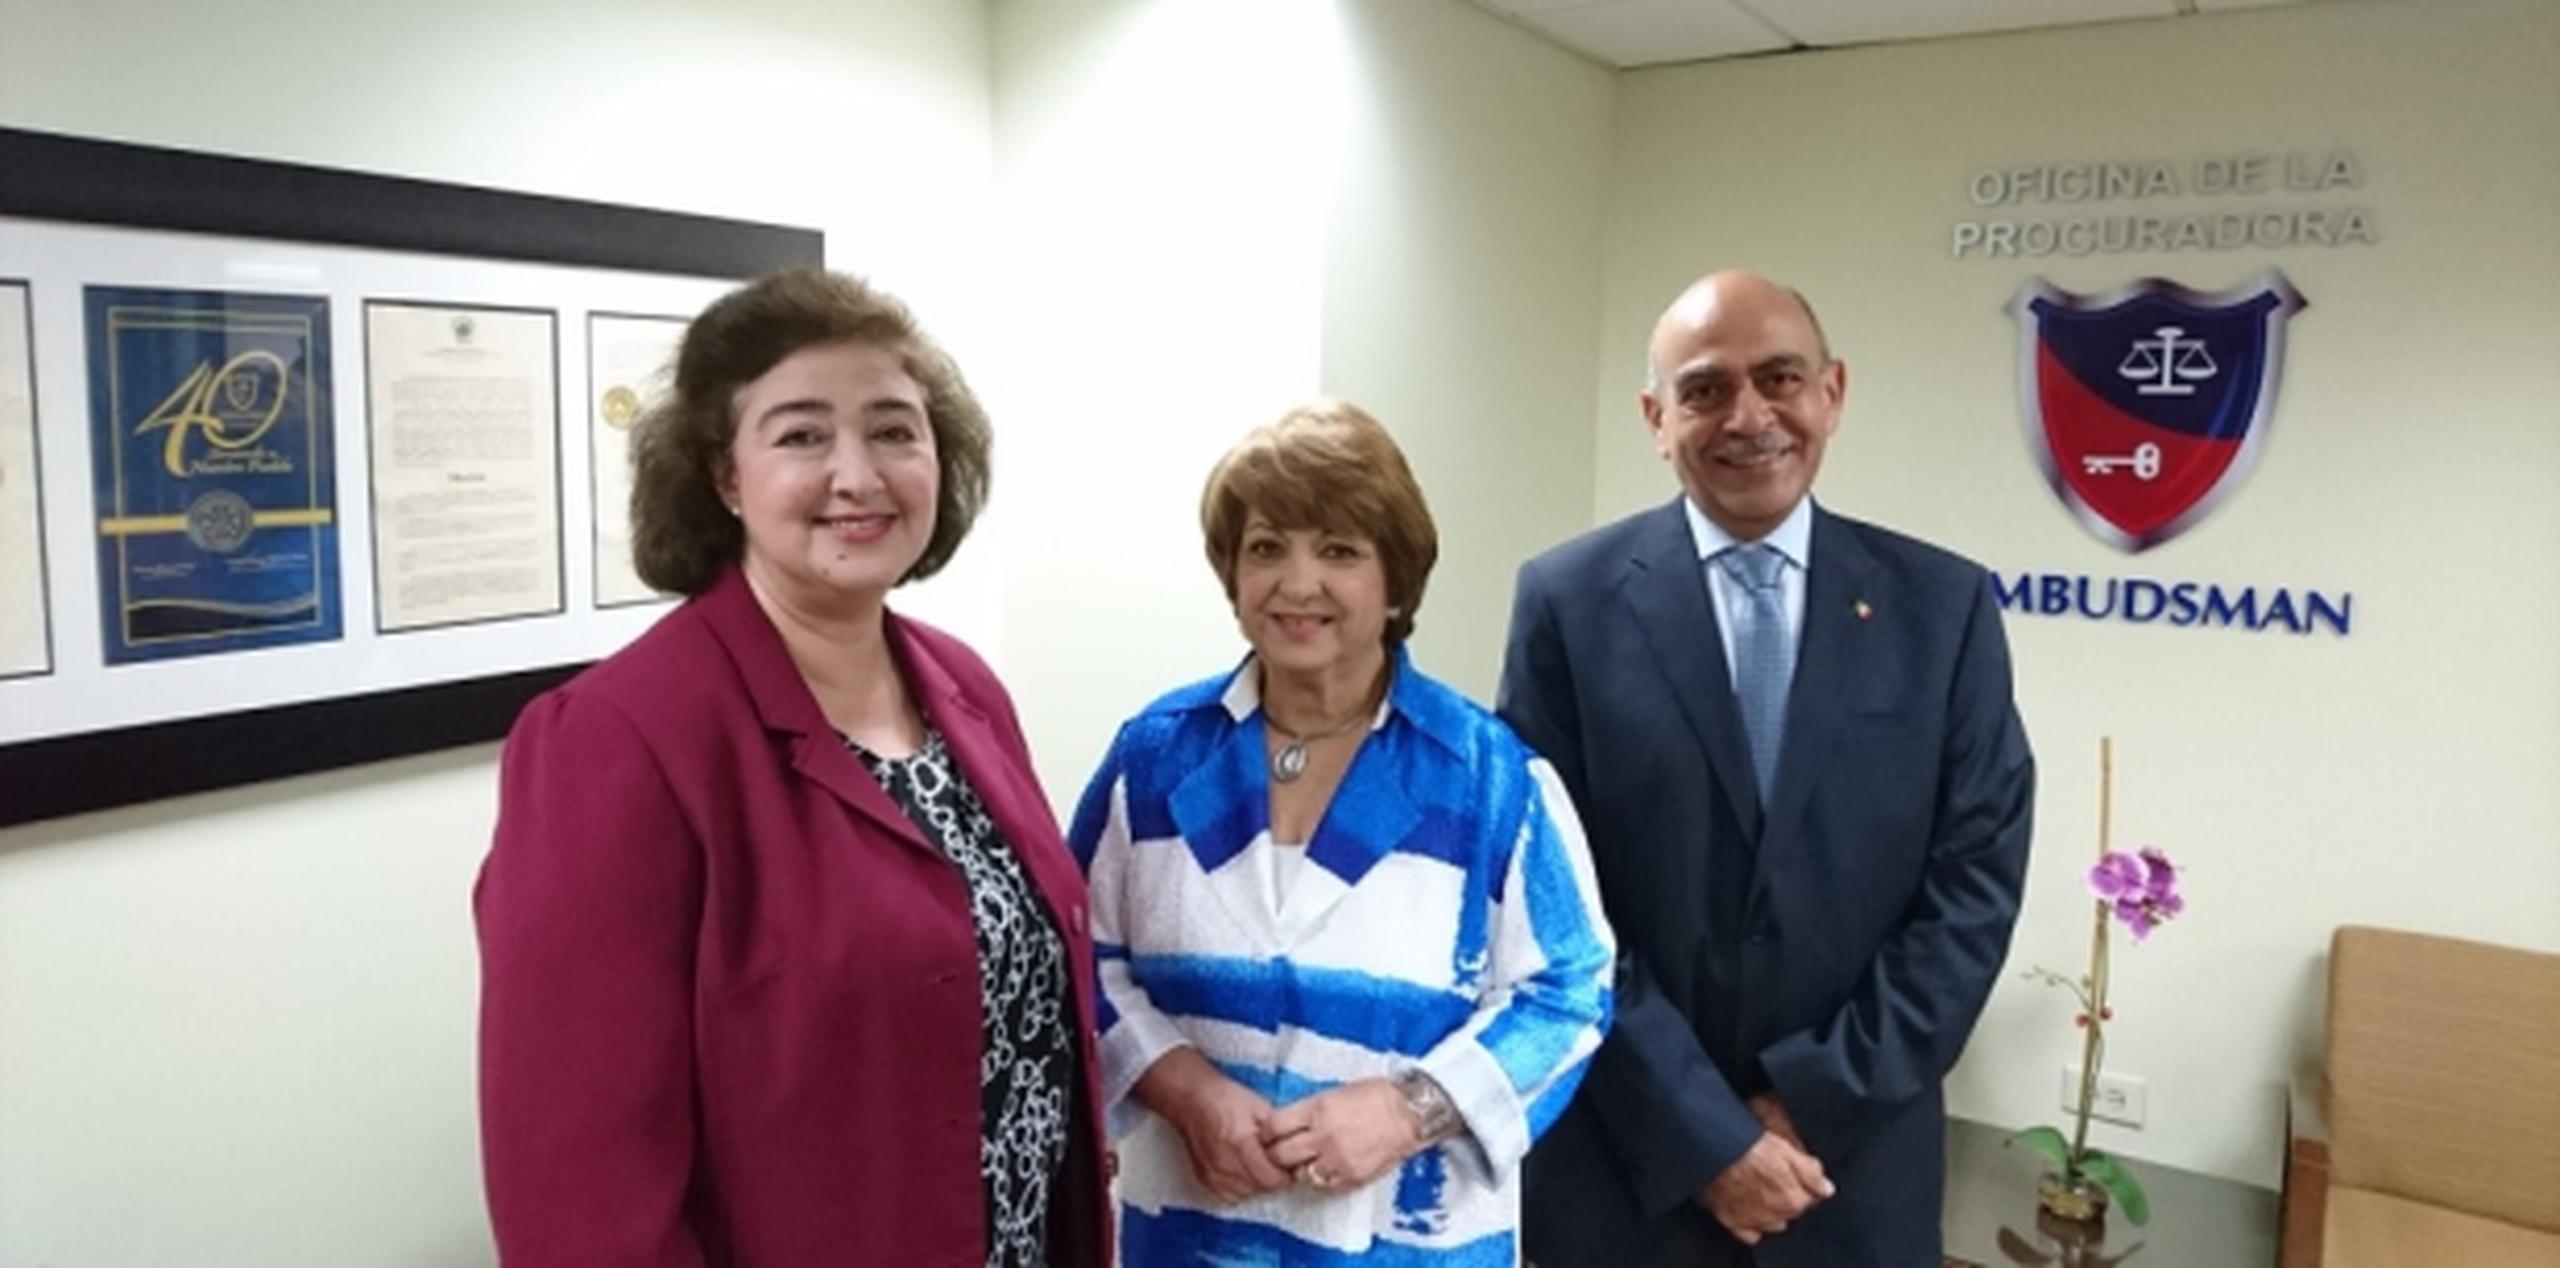 Beatriz Navarro Parada (Cónsul adscrita), ombudsman Iris Miriam Ruiz y cónsul de México Héctor Dávalos.
 (Suministrada)